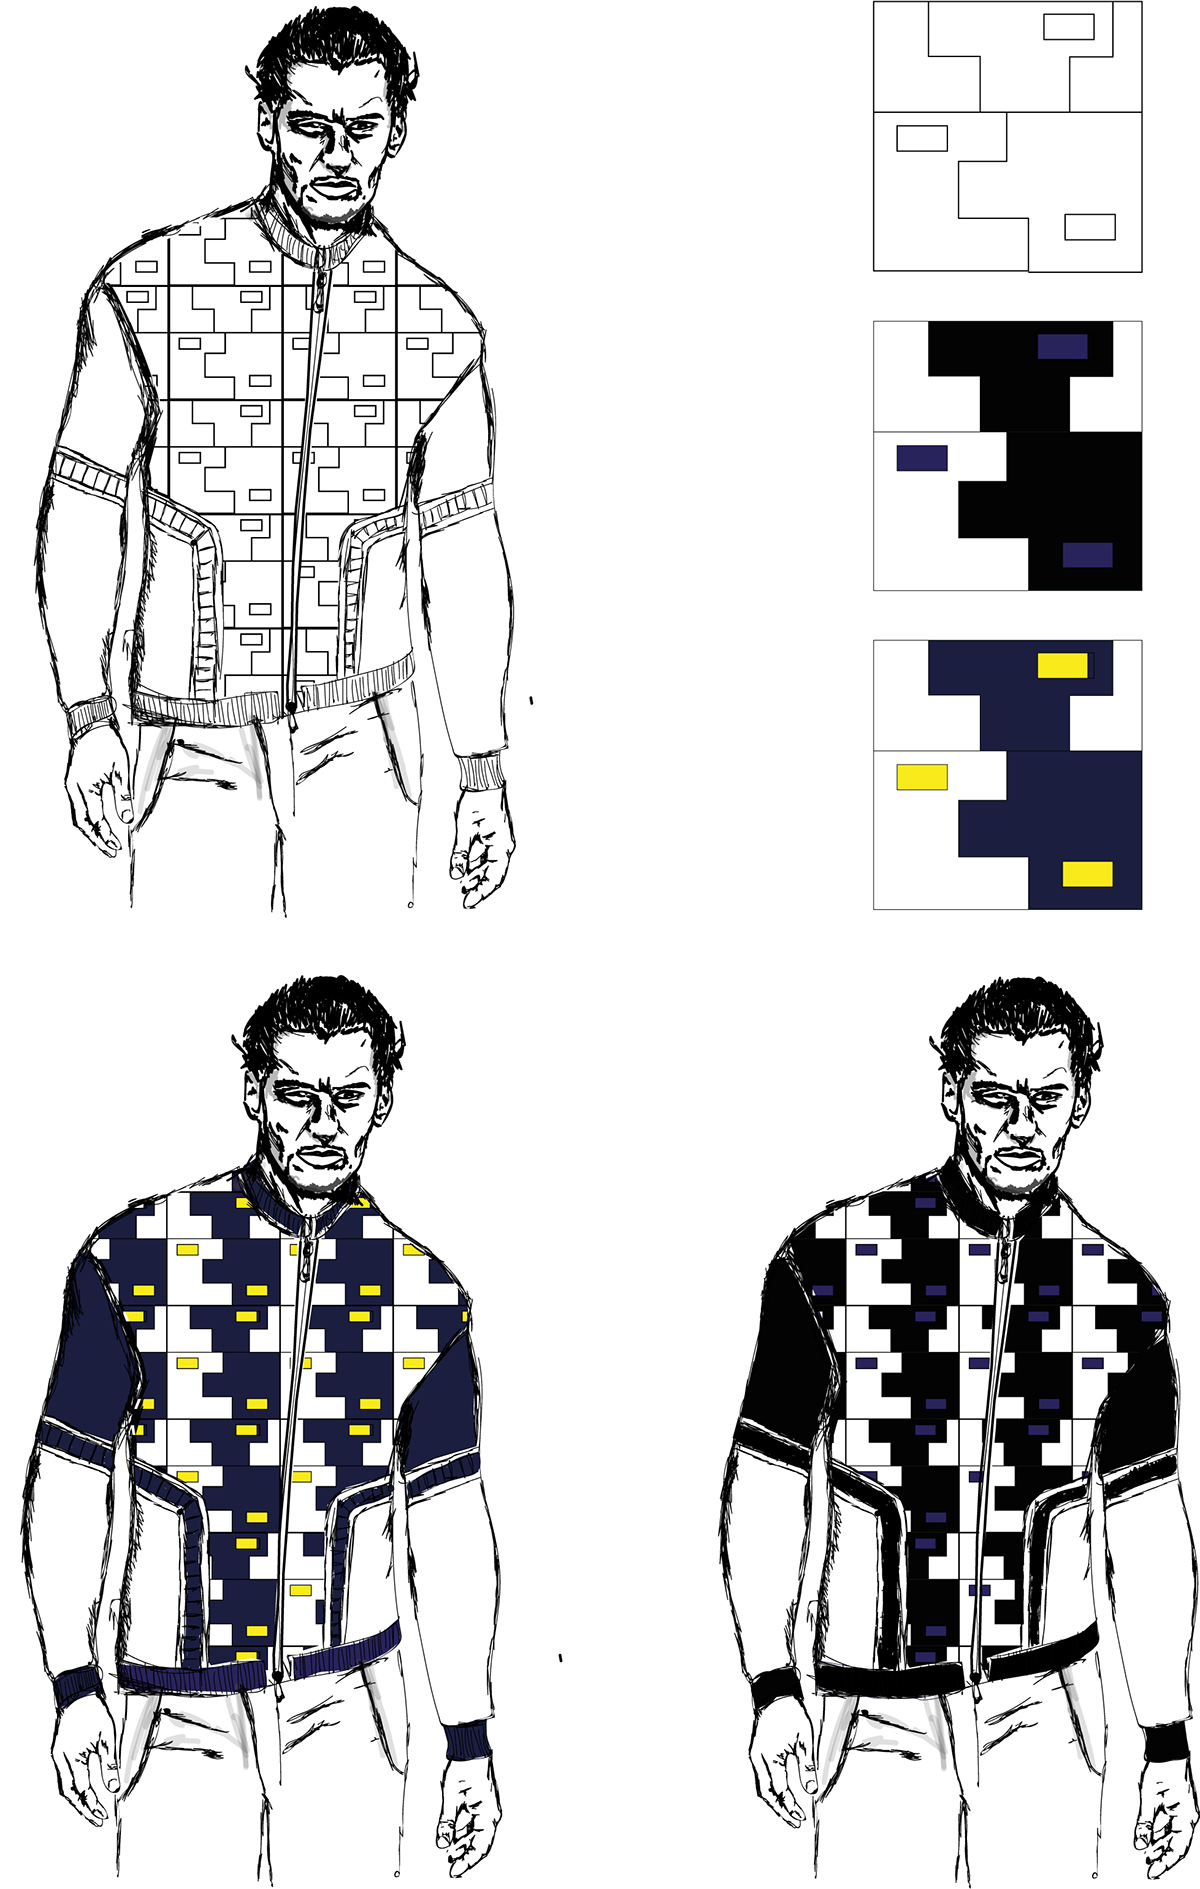 maglieria  knitwear moda cool man men Illustrator graphic